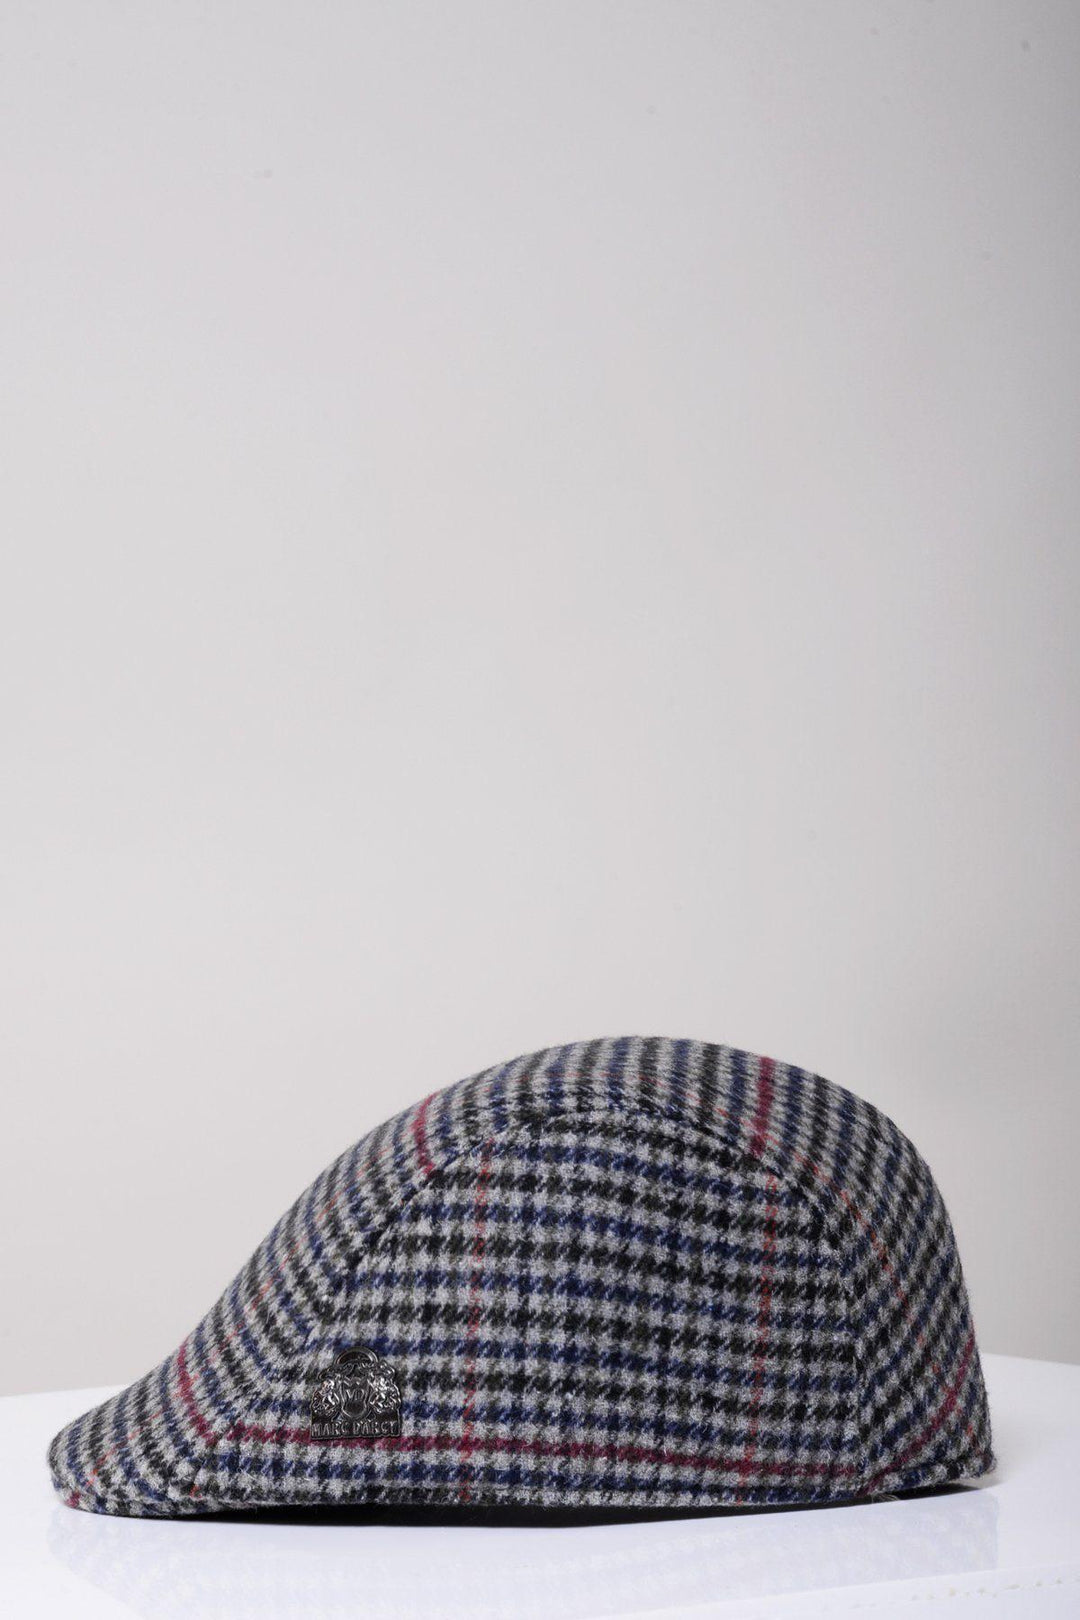 EDWARD - Navy Grey Check Tweed Flat Cap